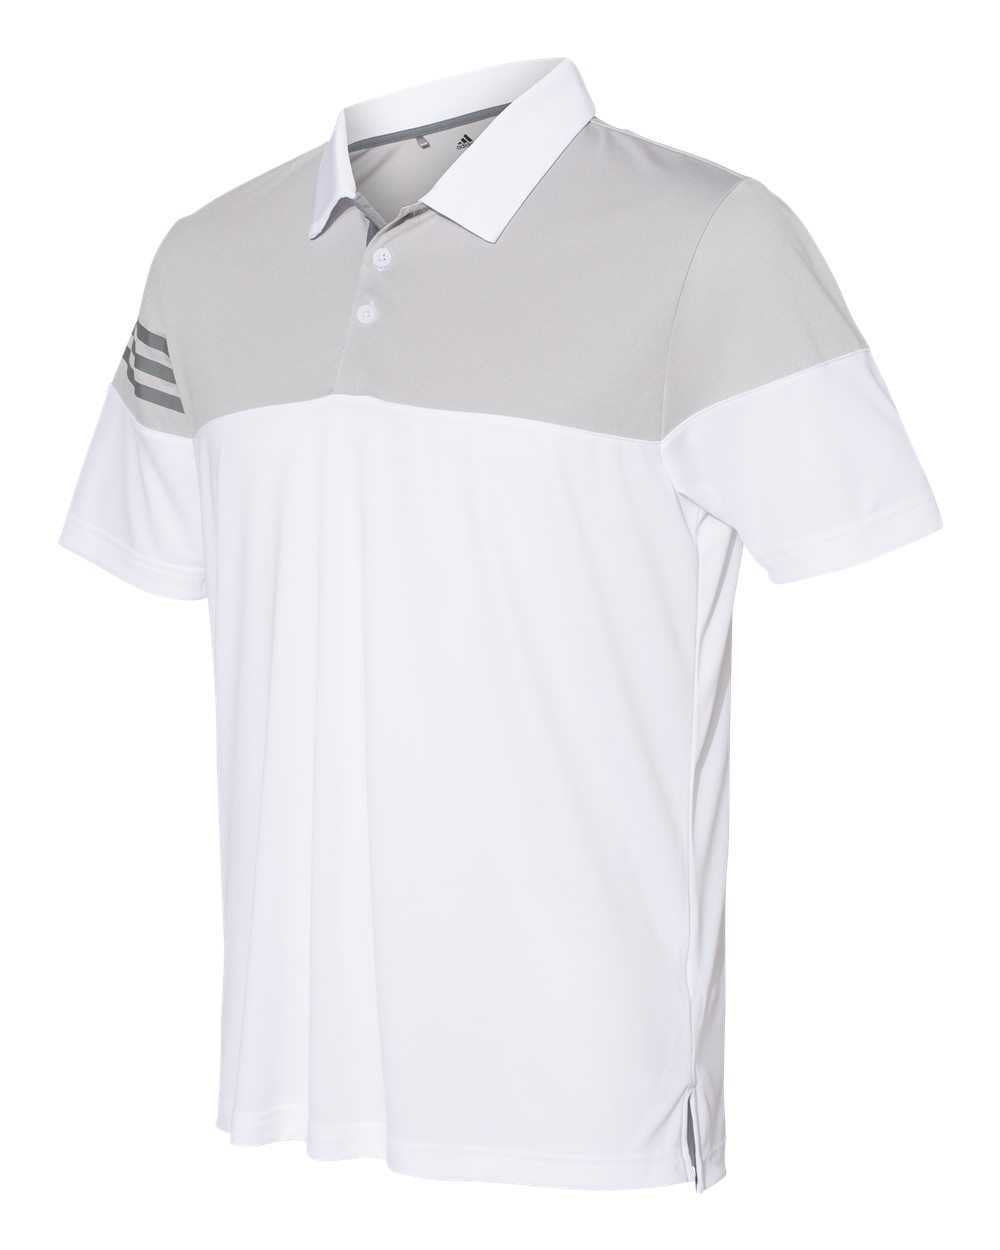 Adidas A213 Heathered 3-Stripes Block Sport Shirt - White Vista Grey - HIT a Double